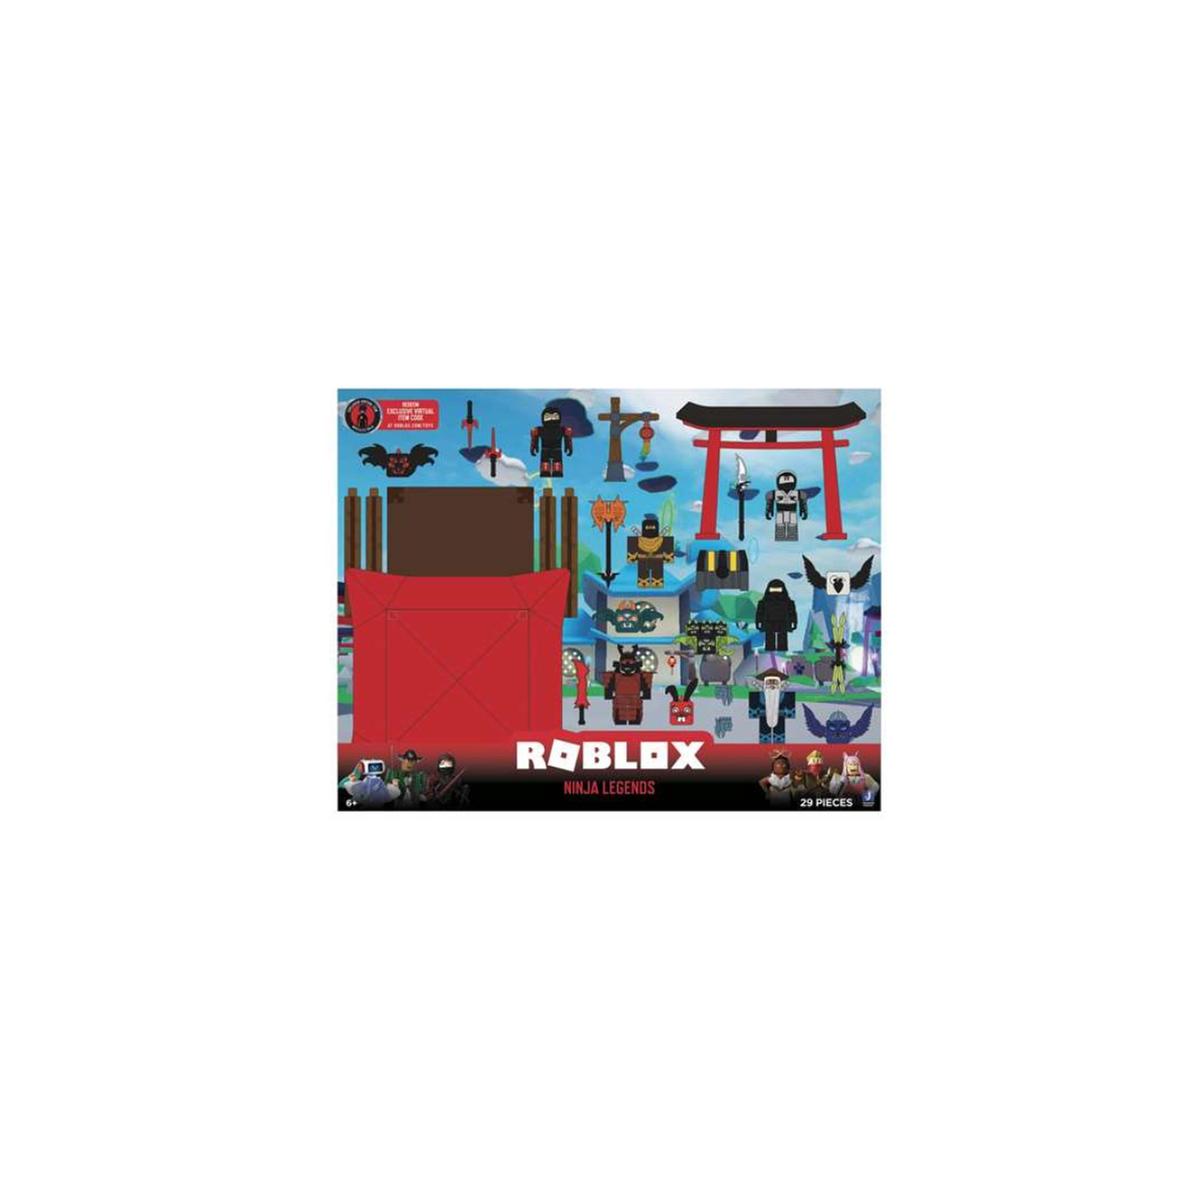  Roblox Action Collection - Ninja Legends Deluxe